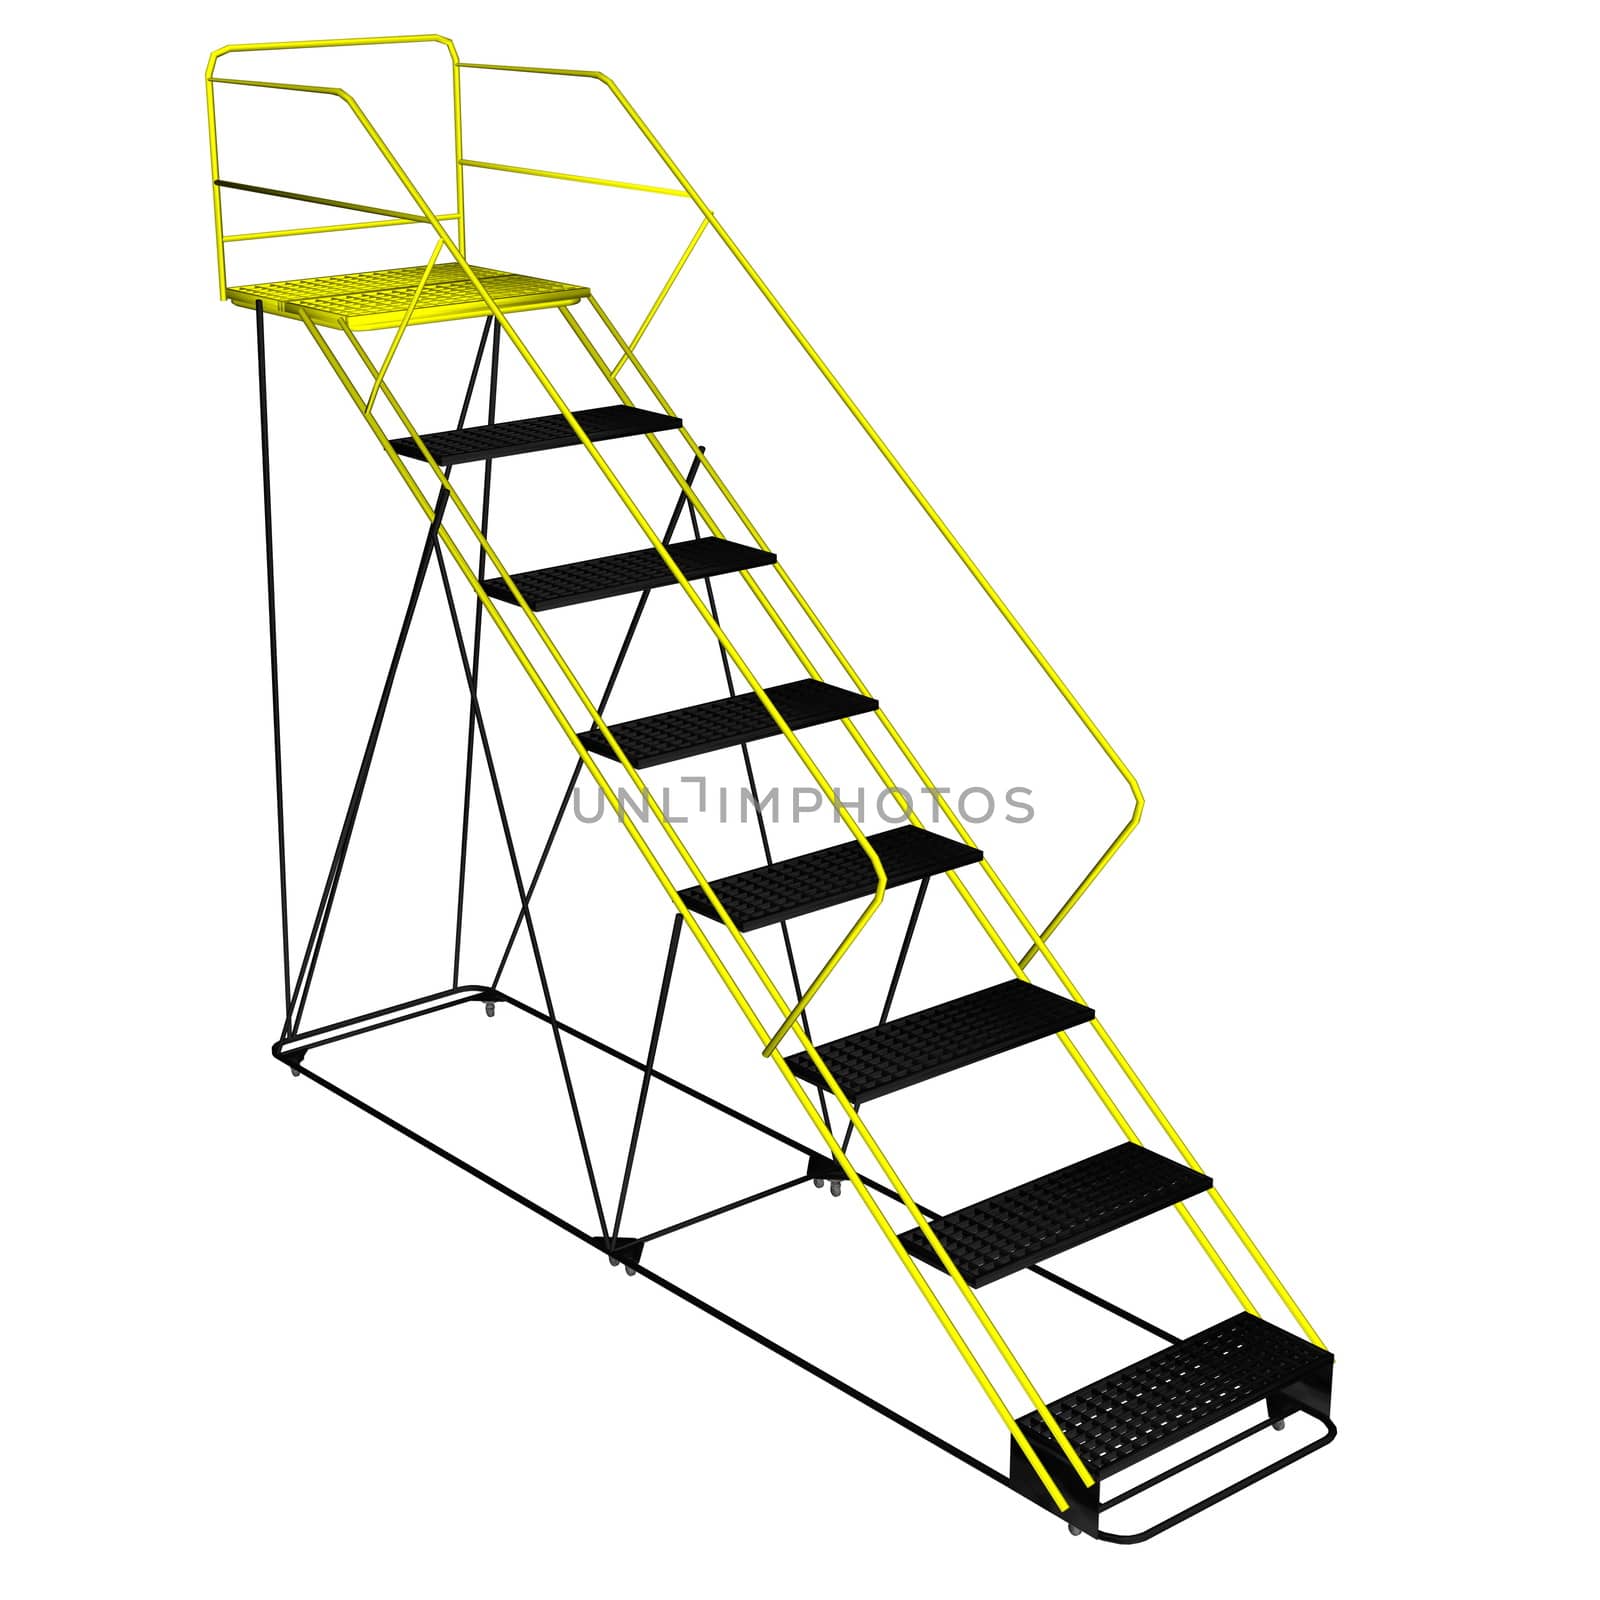 Ladder with platform - 3D render by Elenaphotos21